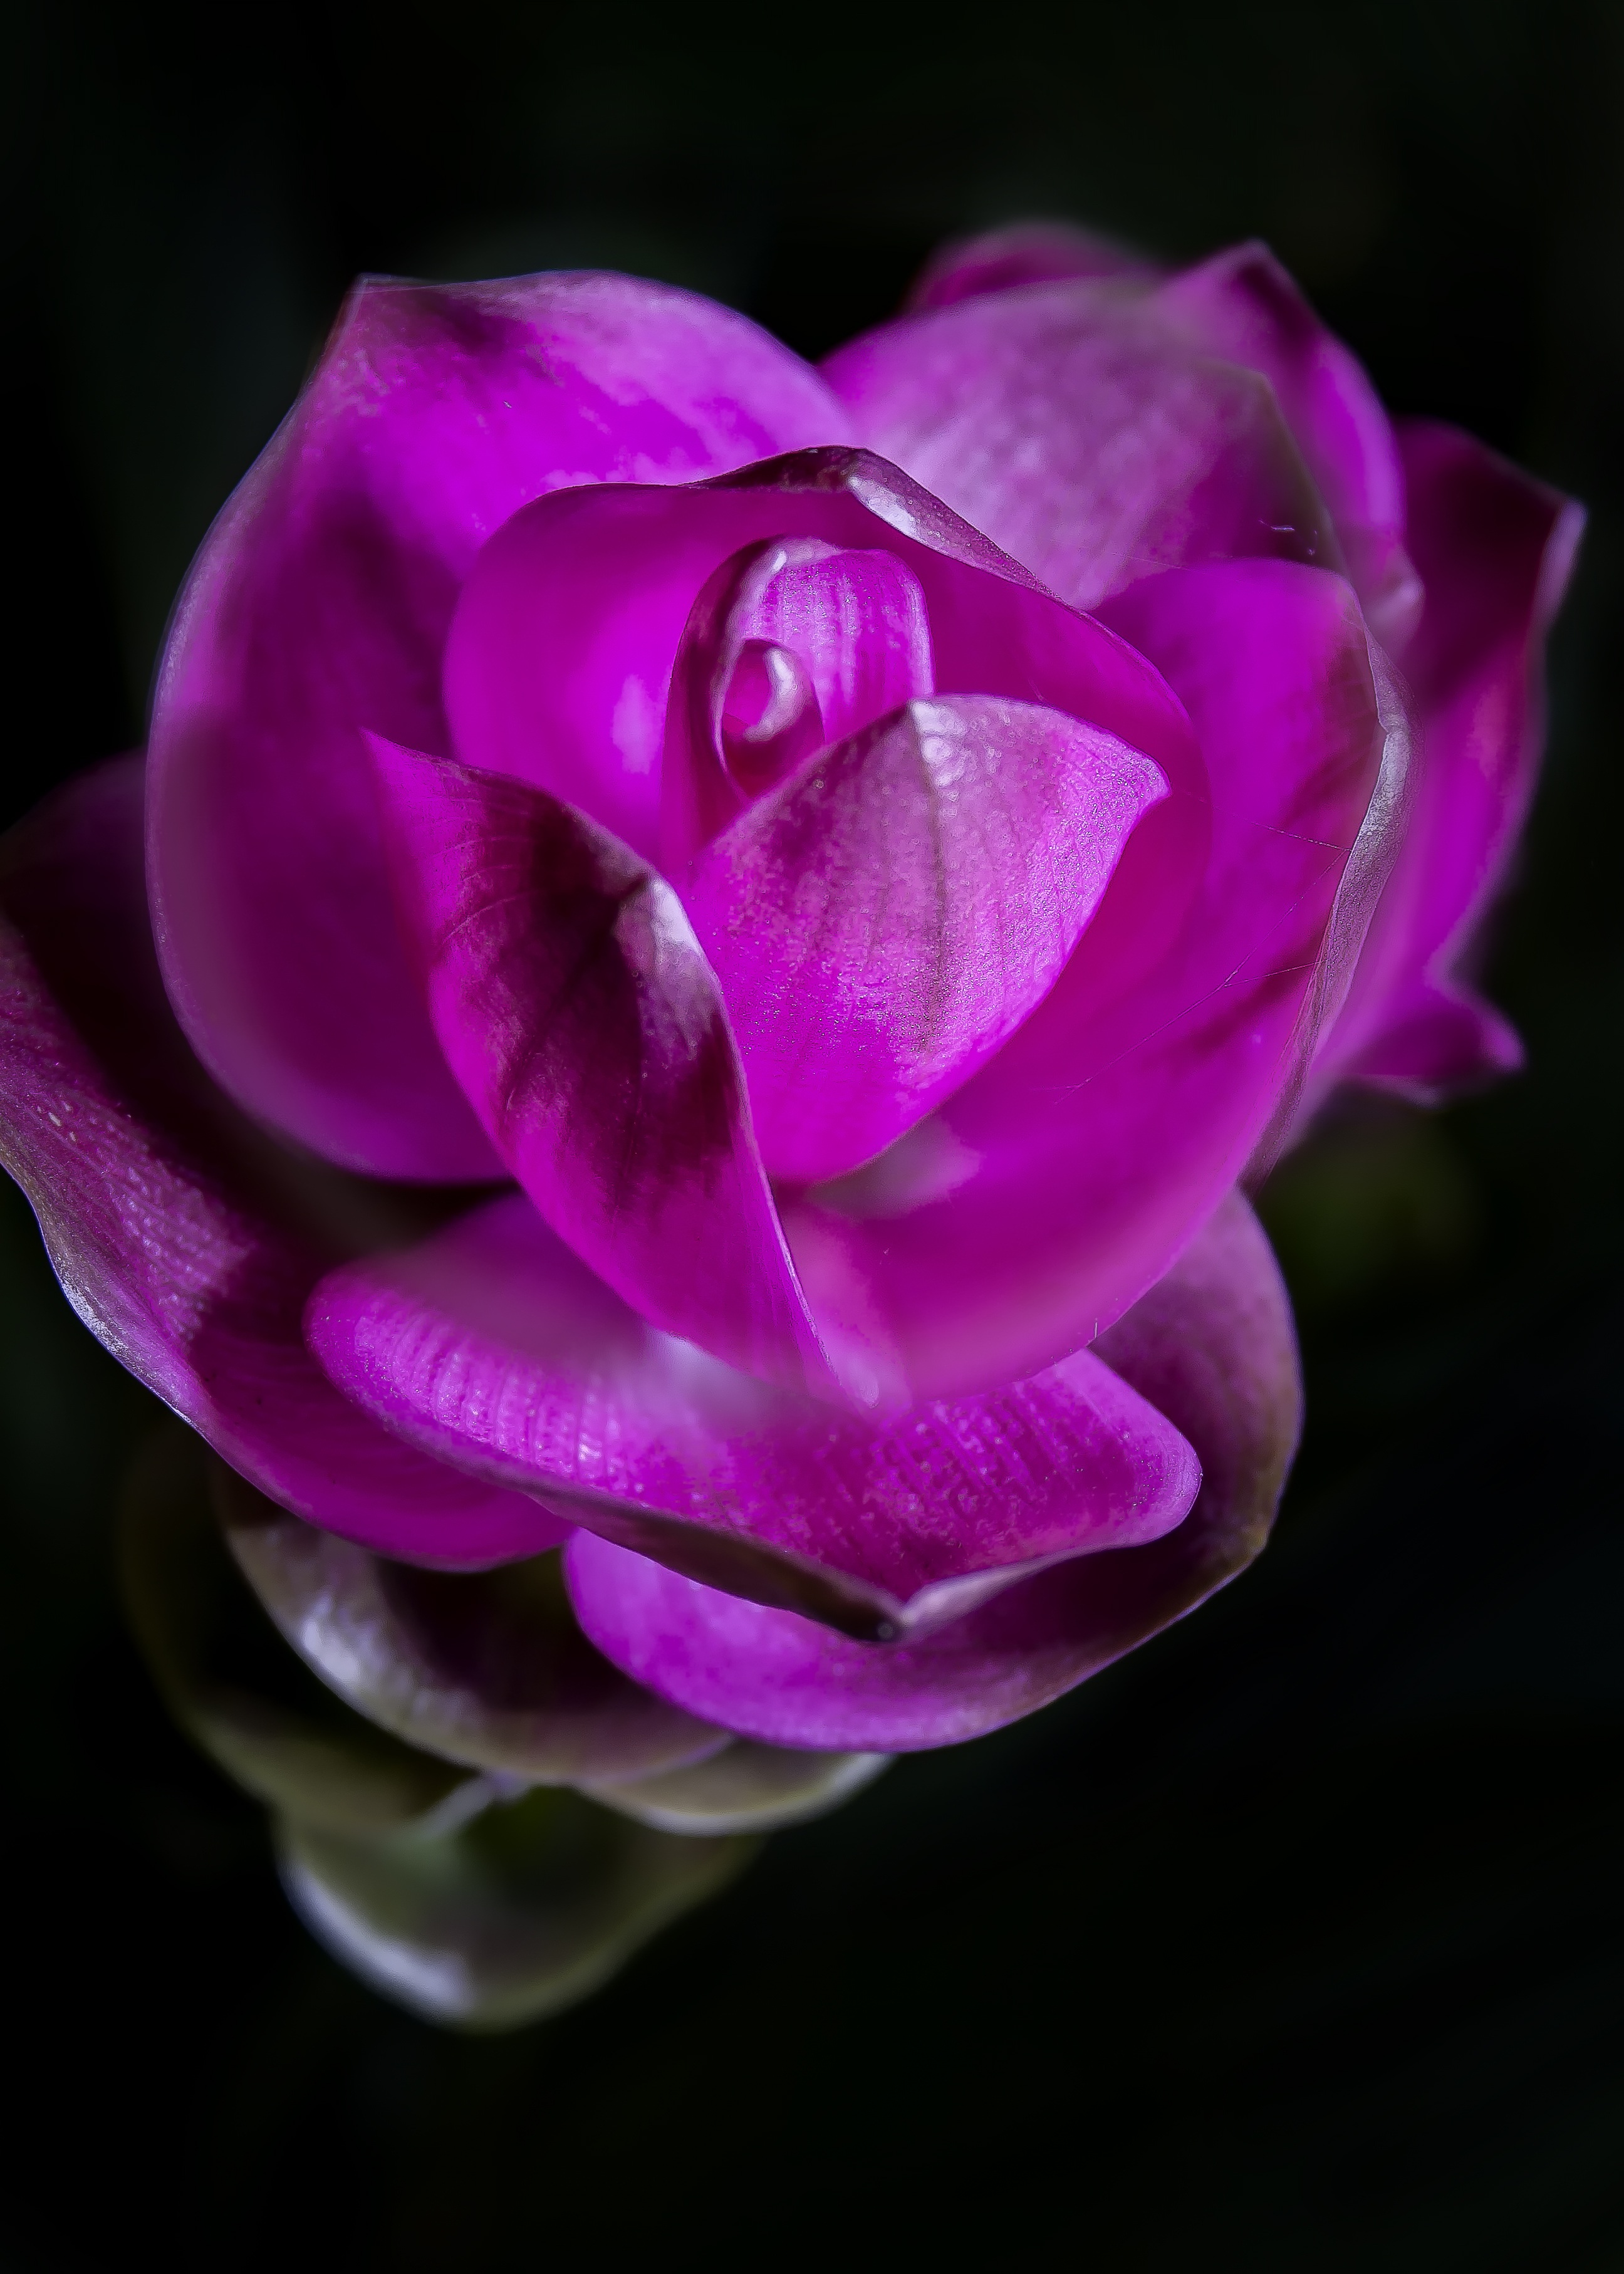 Bright purple flower in black background free image